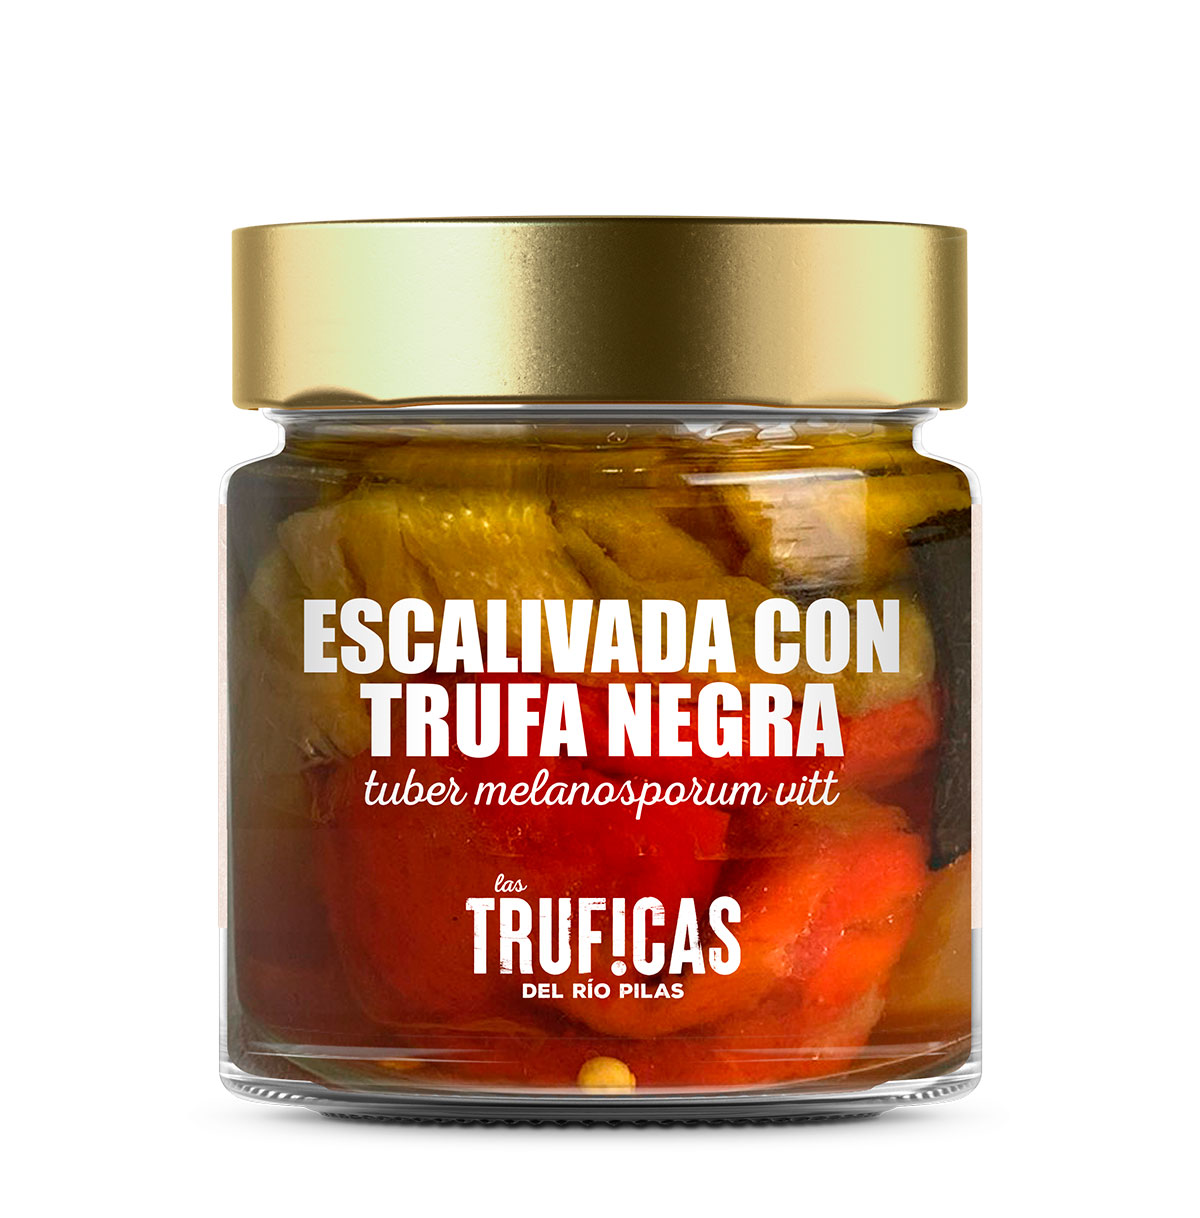 Escalivada with black truffle tuber melanosporum vitt